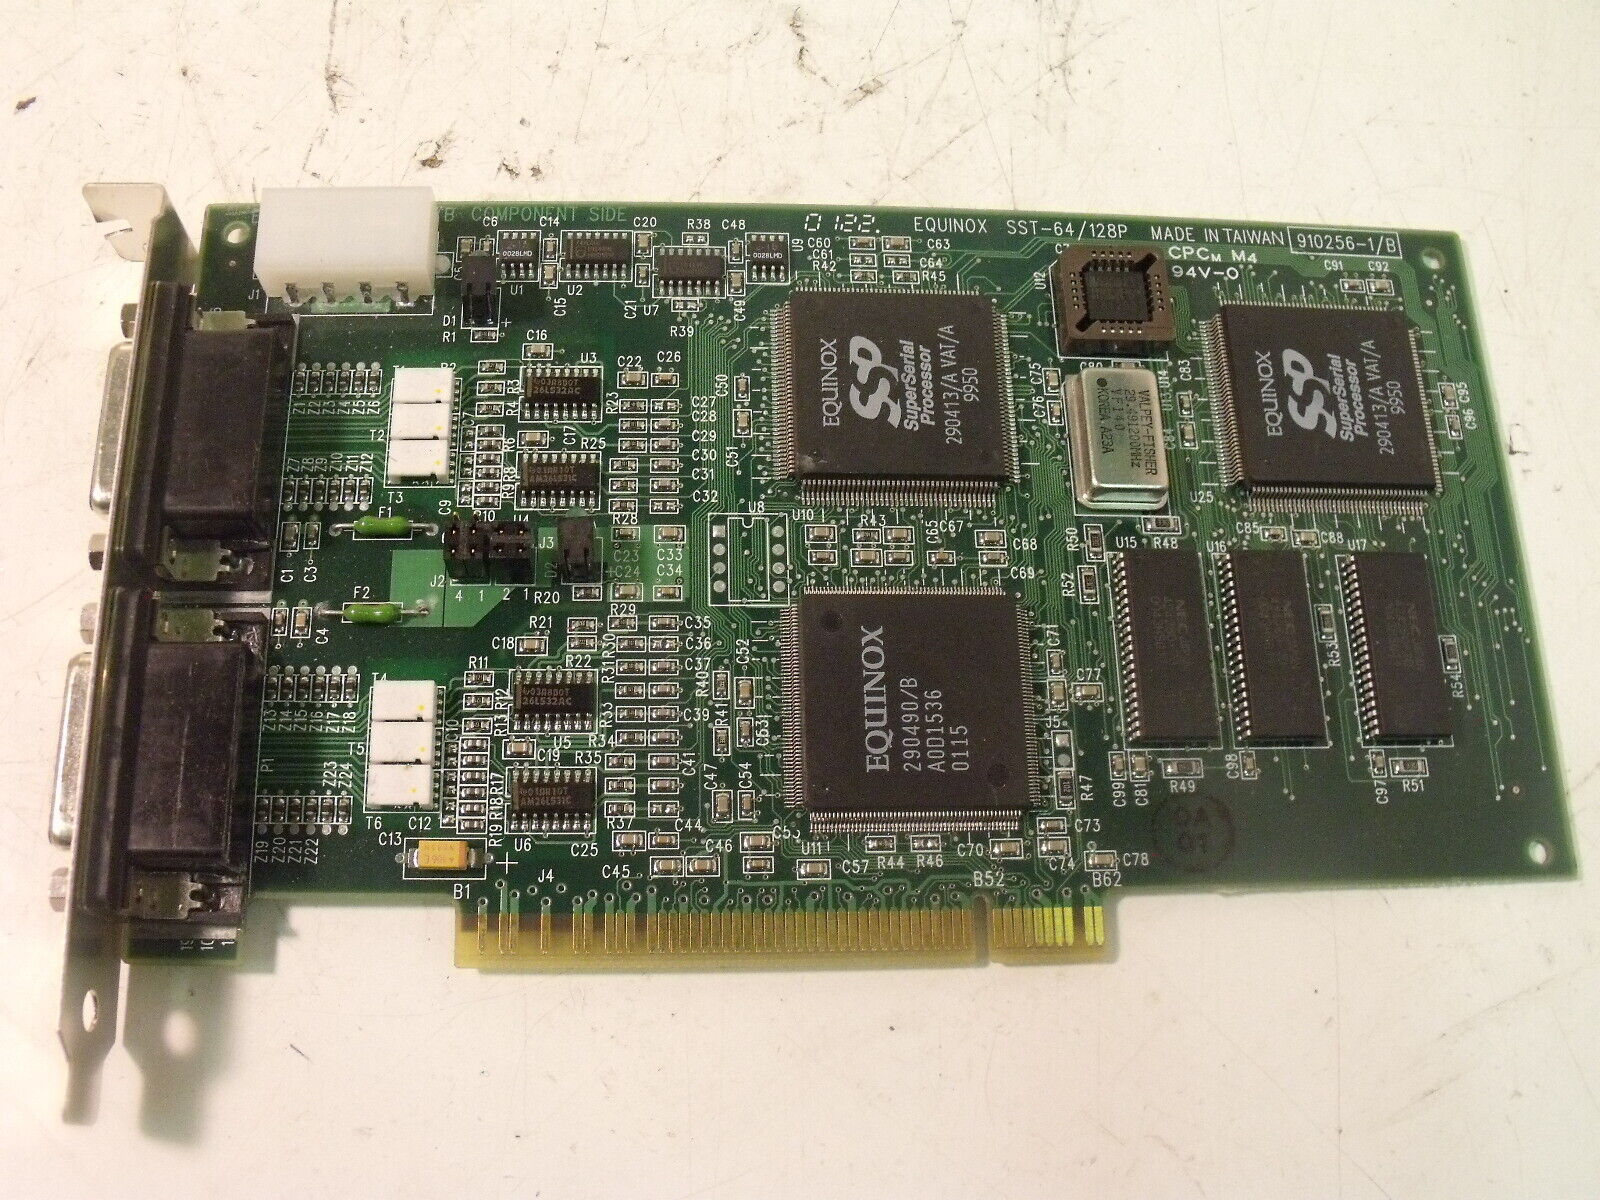 Equinox 860256-1/B SST-128P PCI Port Adapter:  128 Port